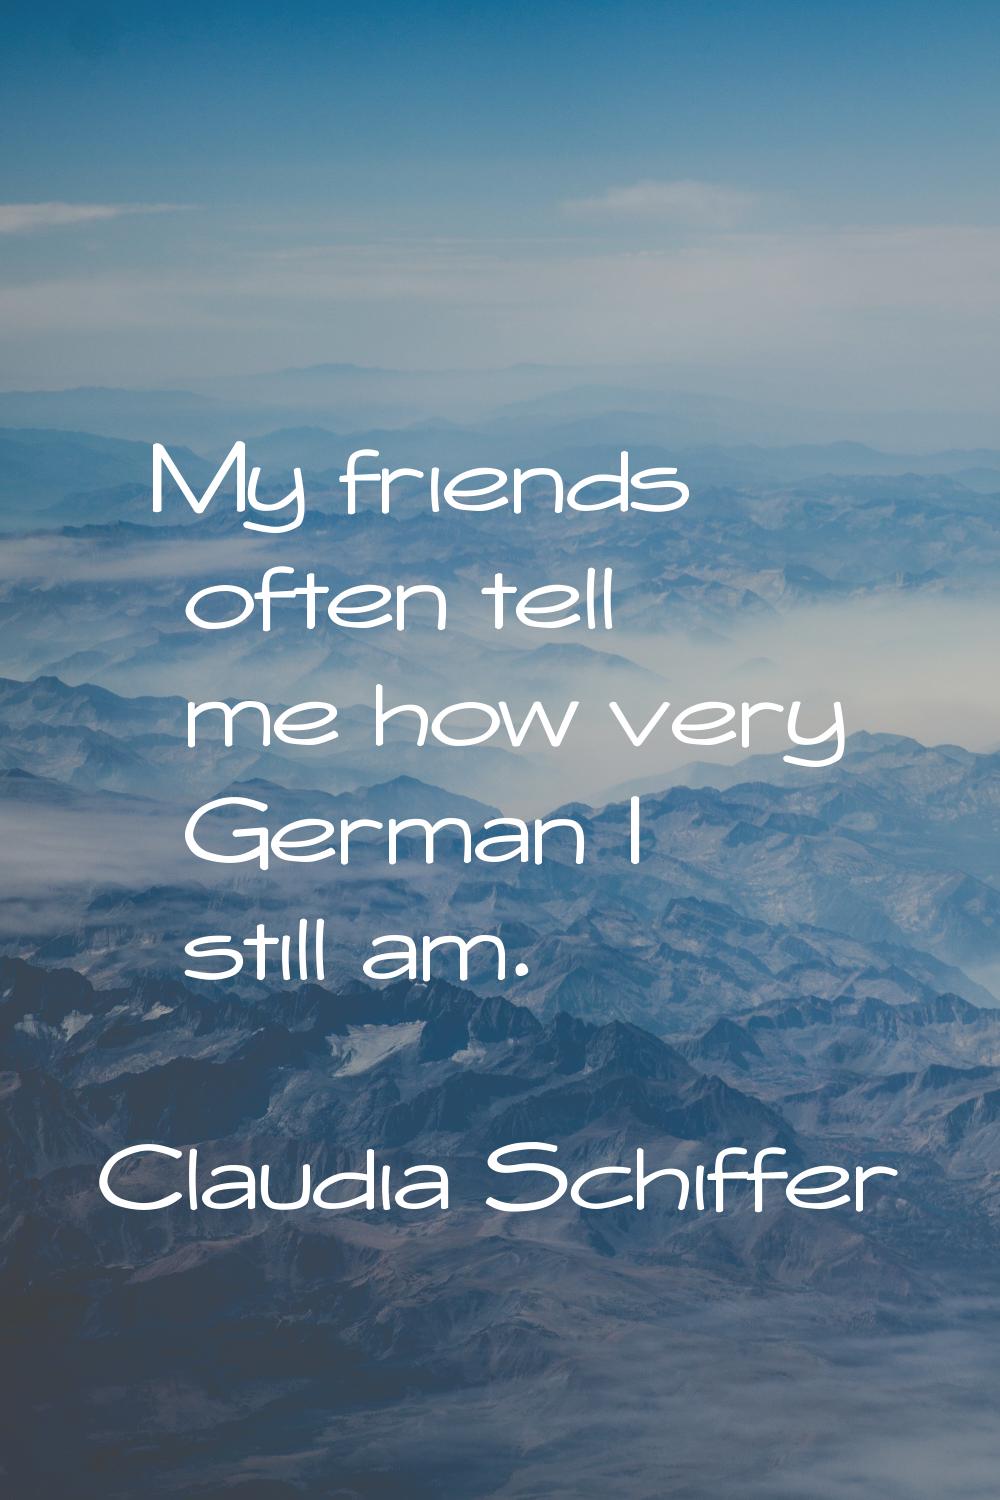 My friends often tell me how very German I still am.